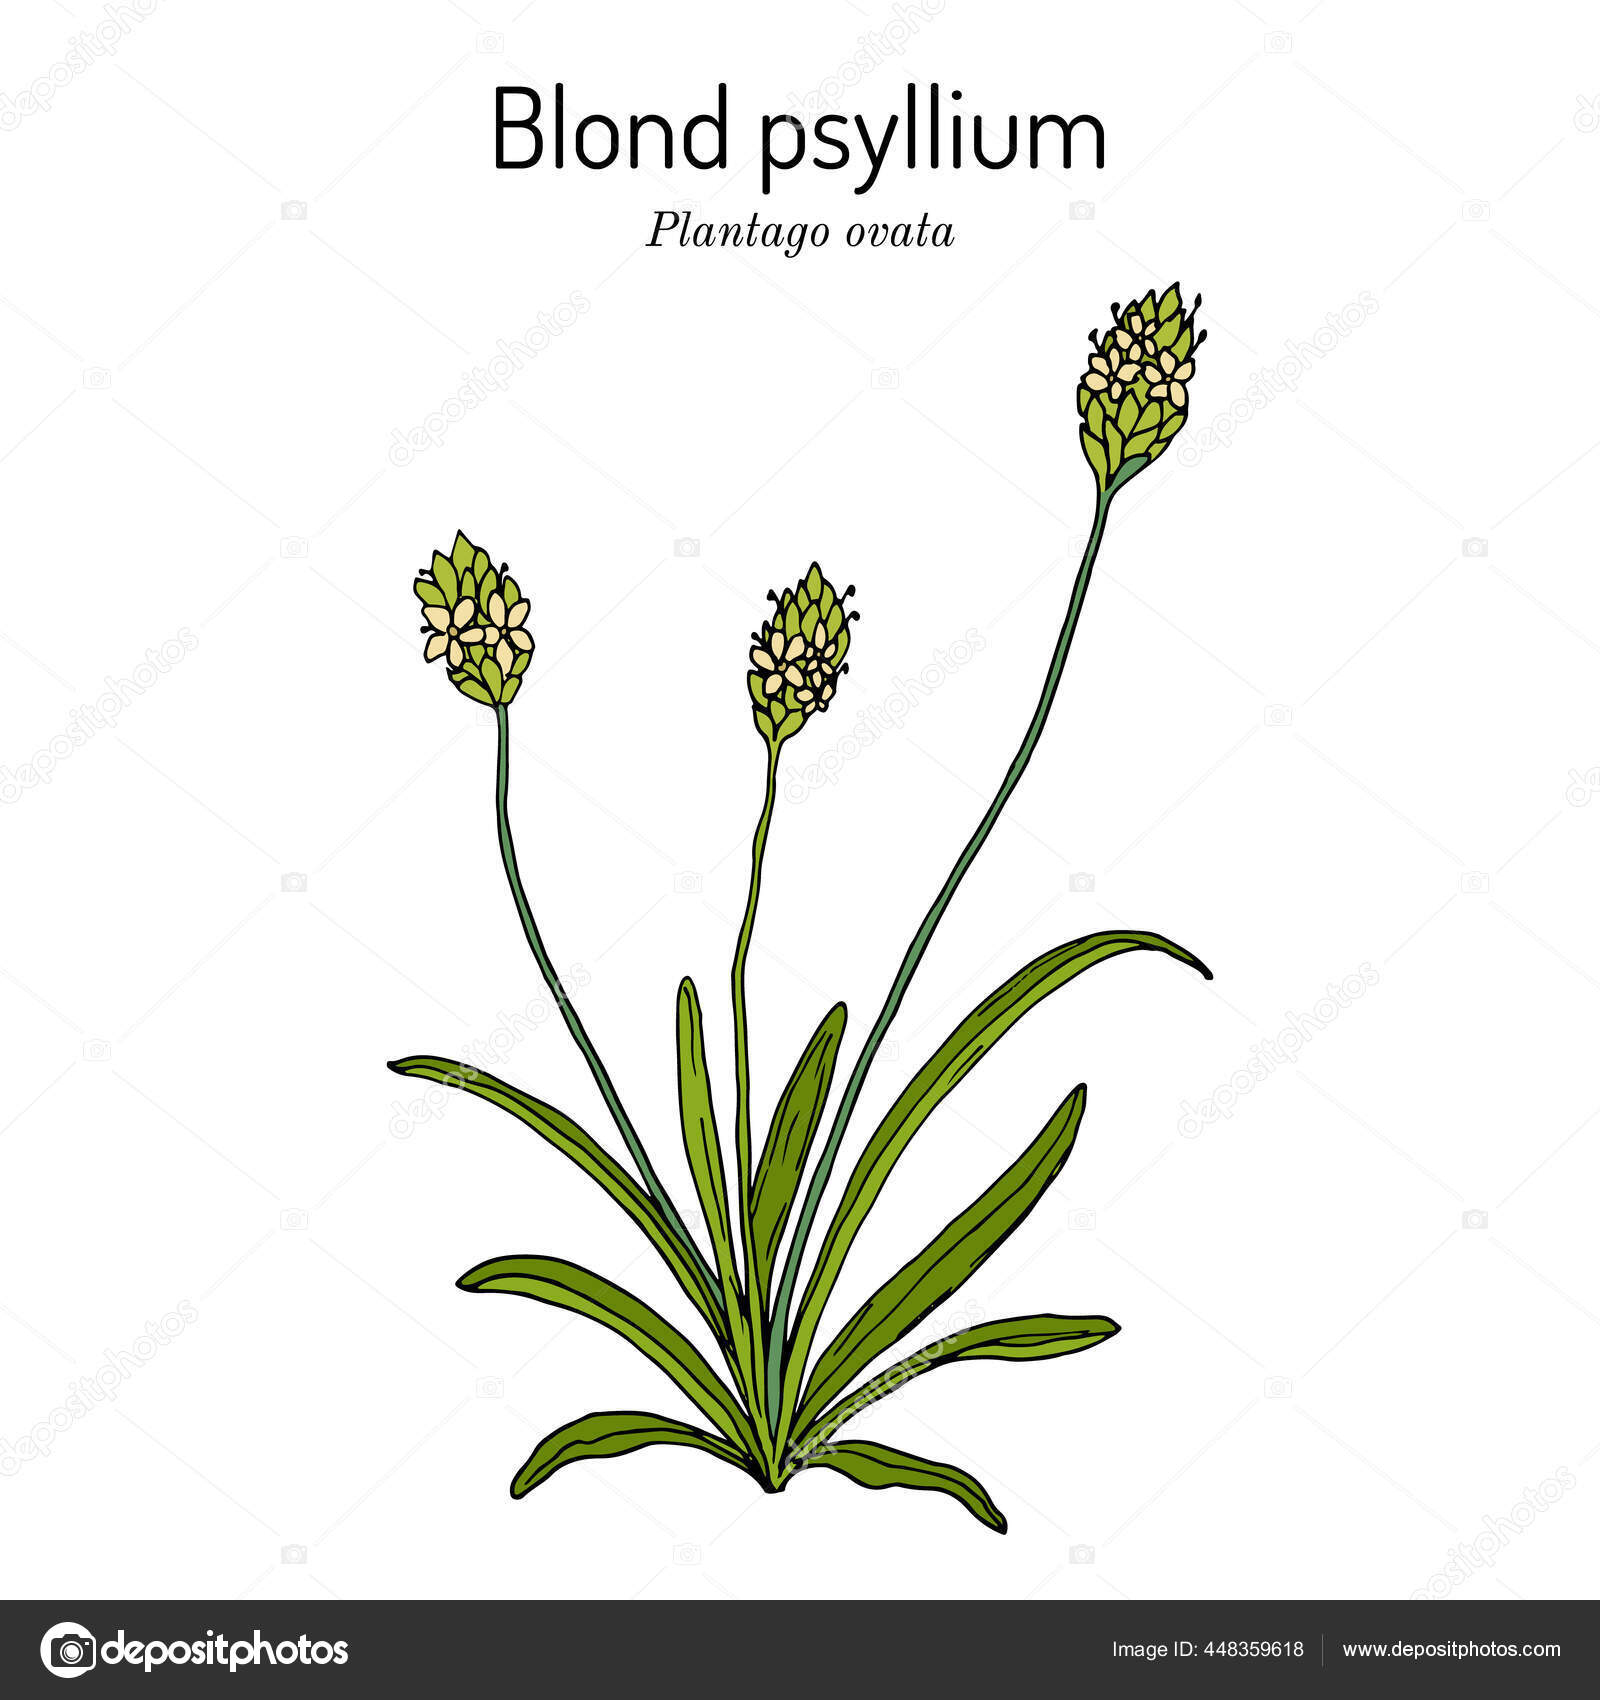 blond plantain or psyllium, plantago ovata , medicinal plant stock